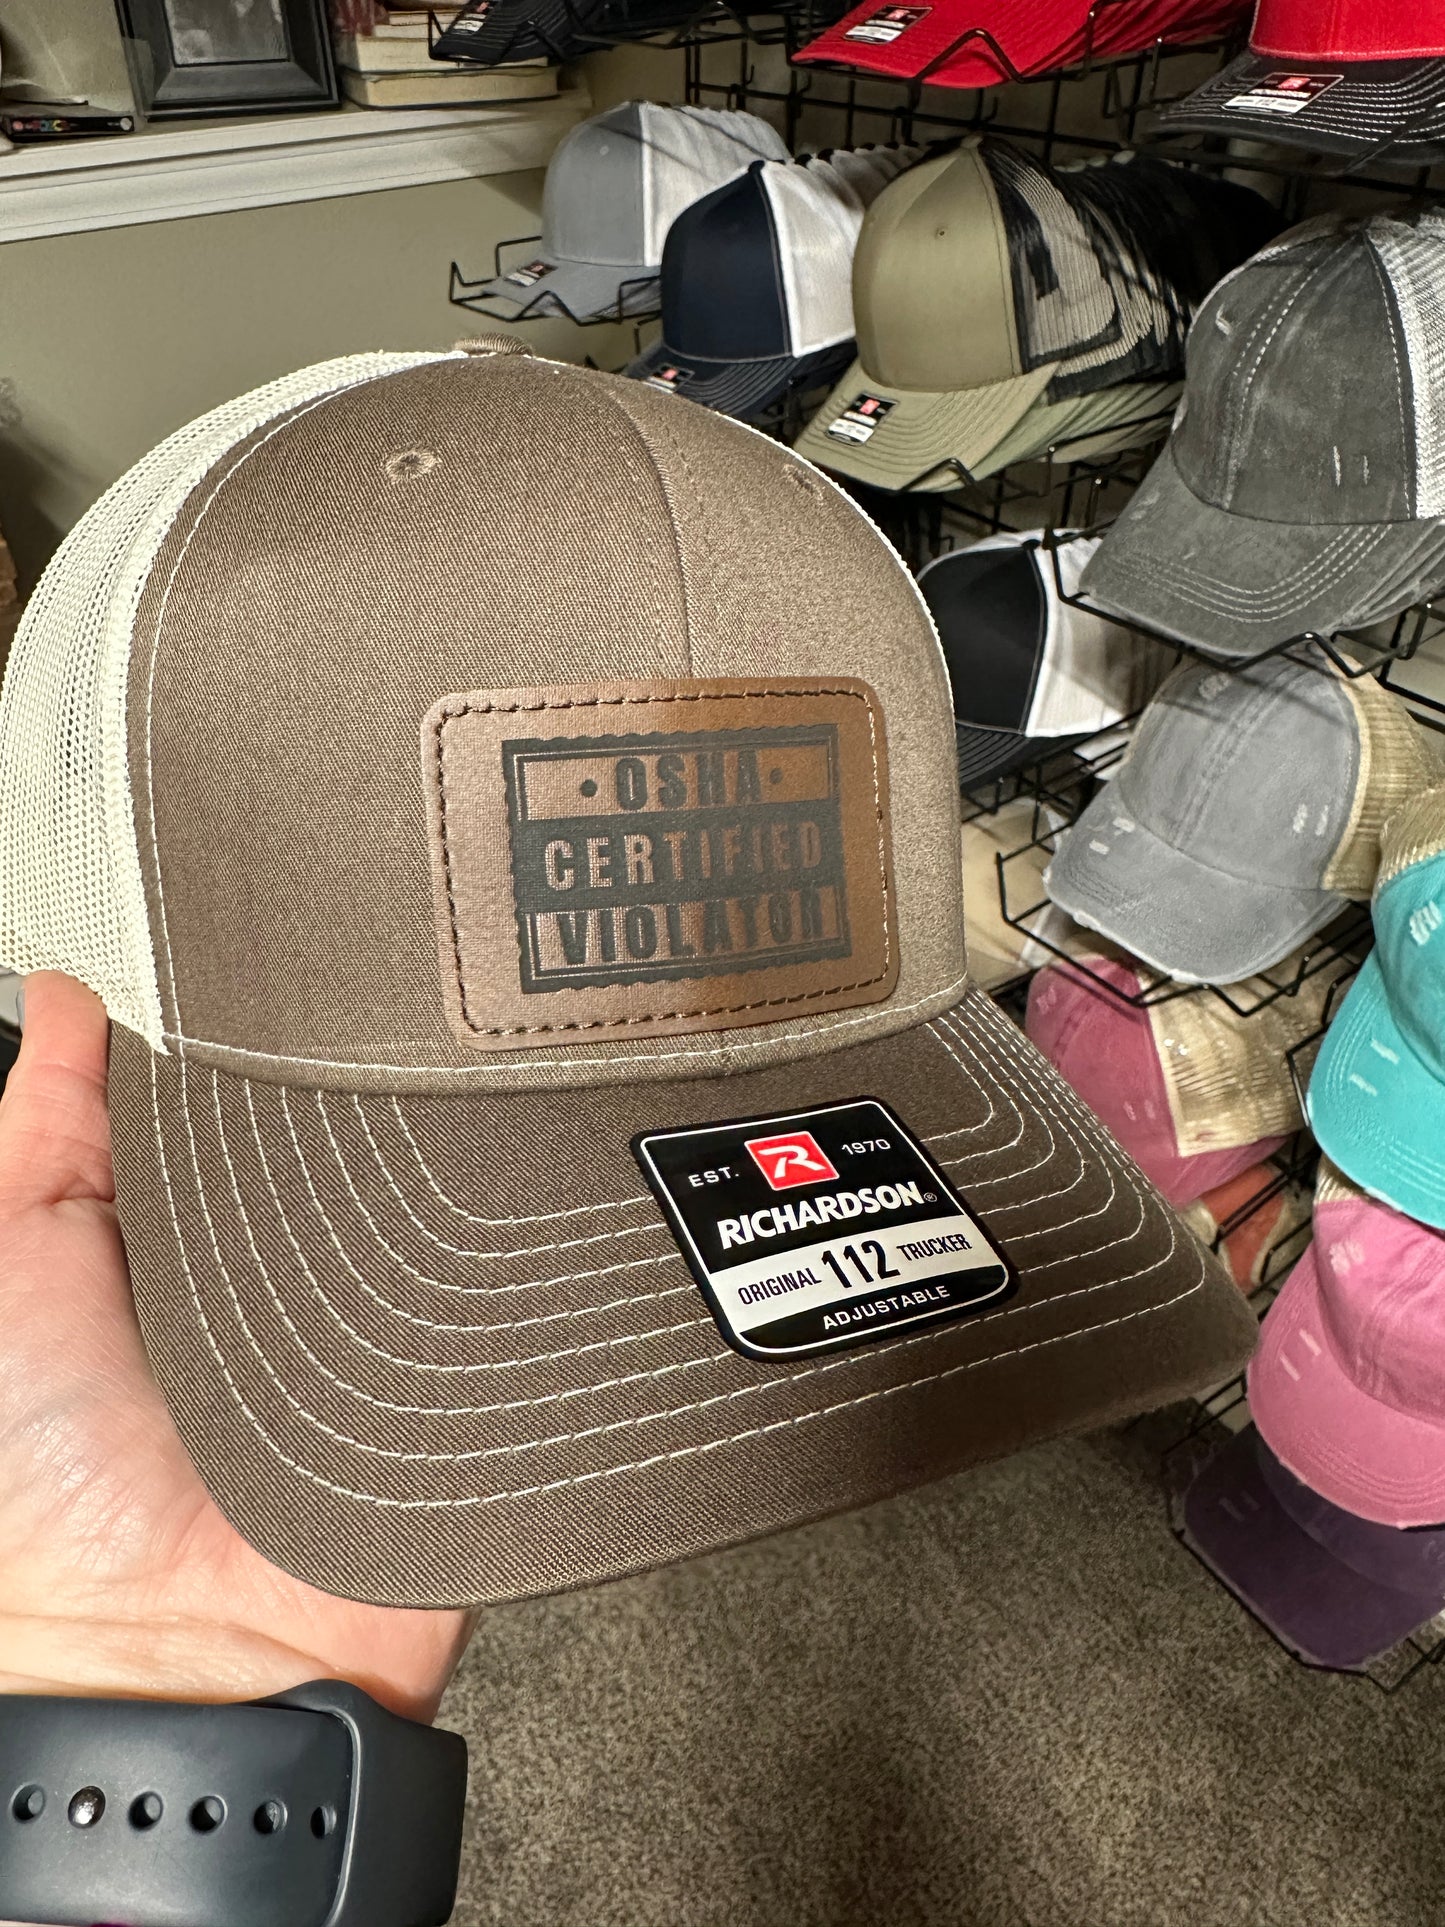 Certified Osha Violator Men's Richardson 112 Trucker Hat